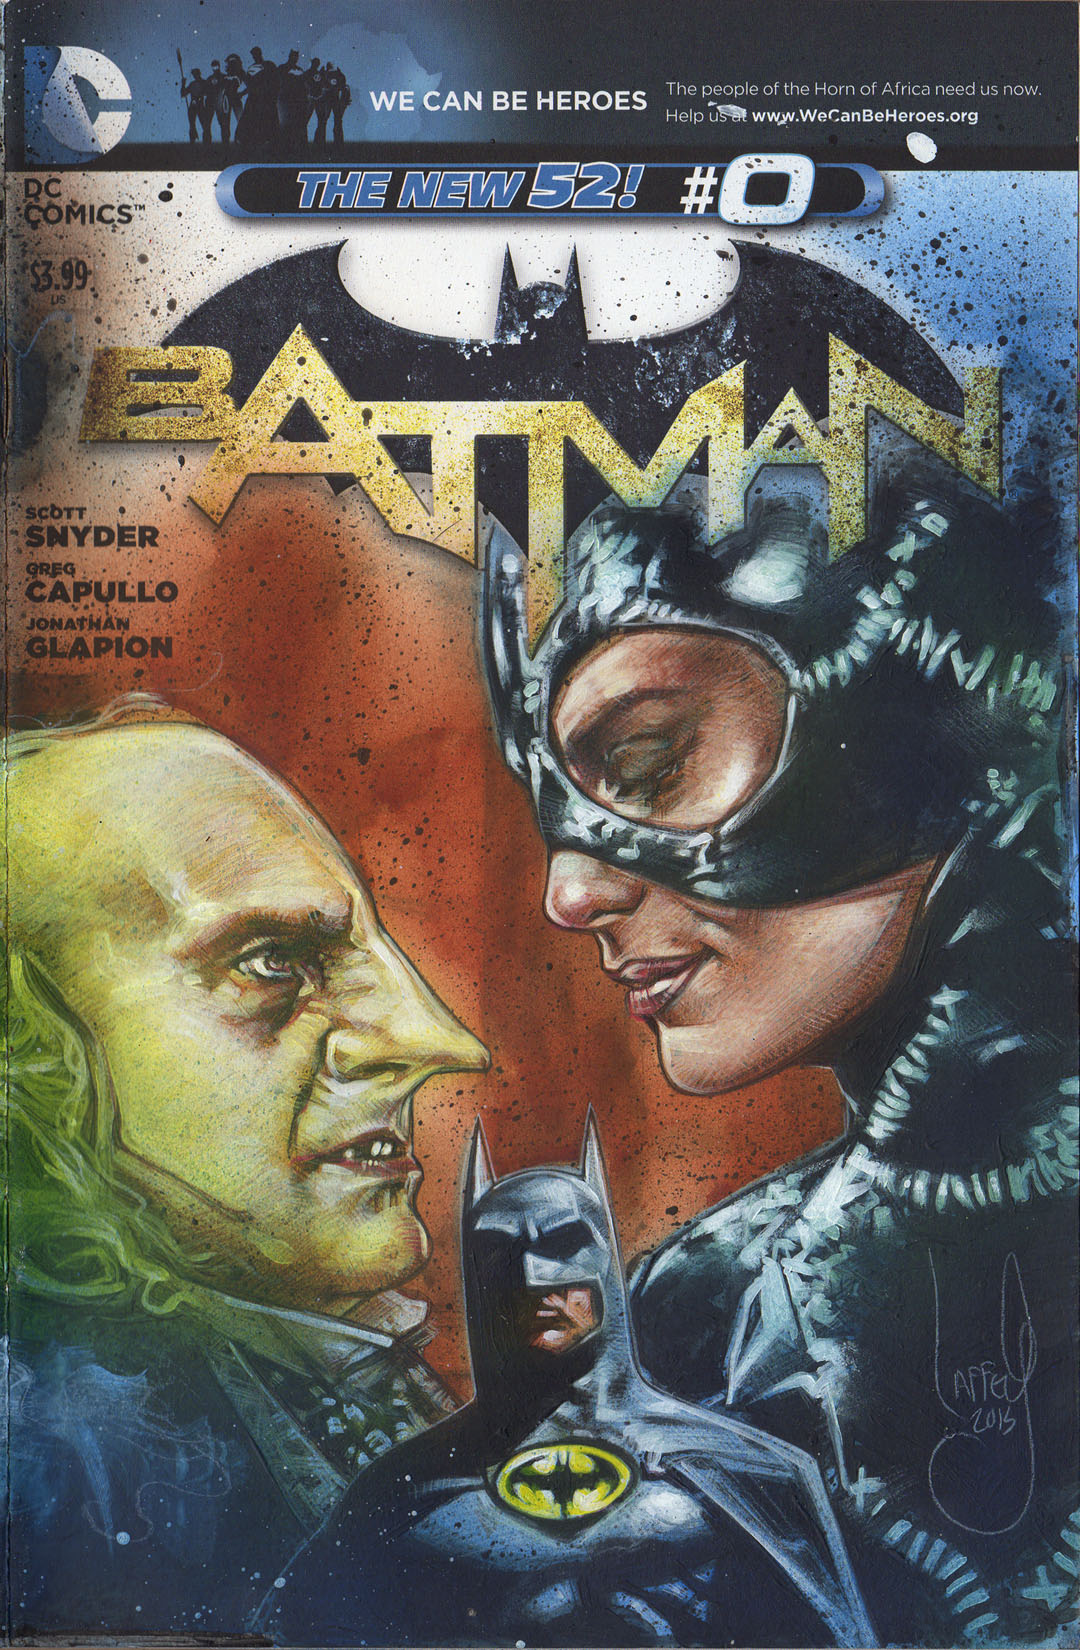 Batman Sketch Cover, Artwork is Copyright © 2014 Jeff Lafferty